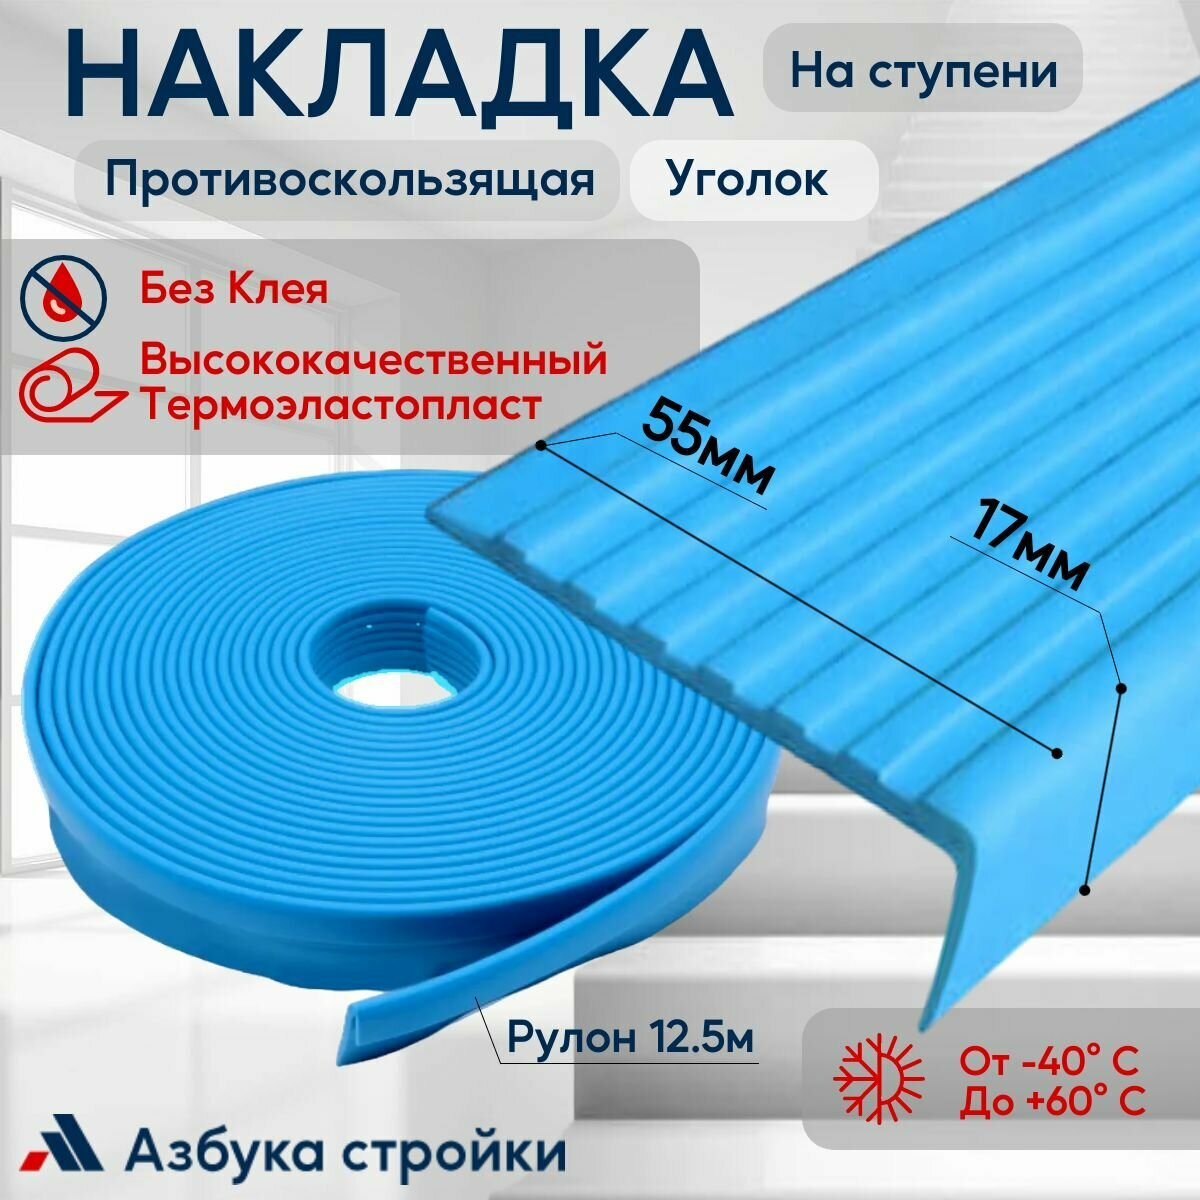 Противоскользящая лента Противоскользящая резиновая накладка угол на ступени без клея 55мм 12.5м, голубой